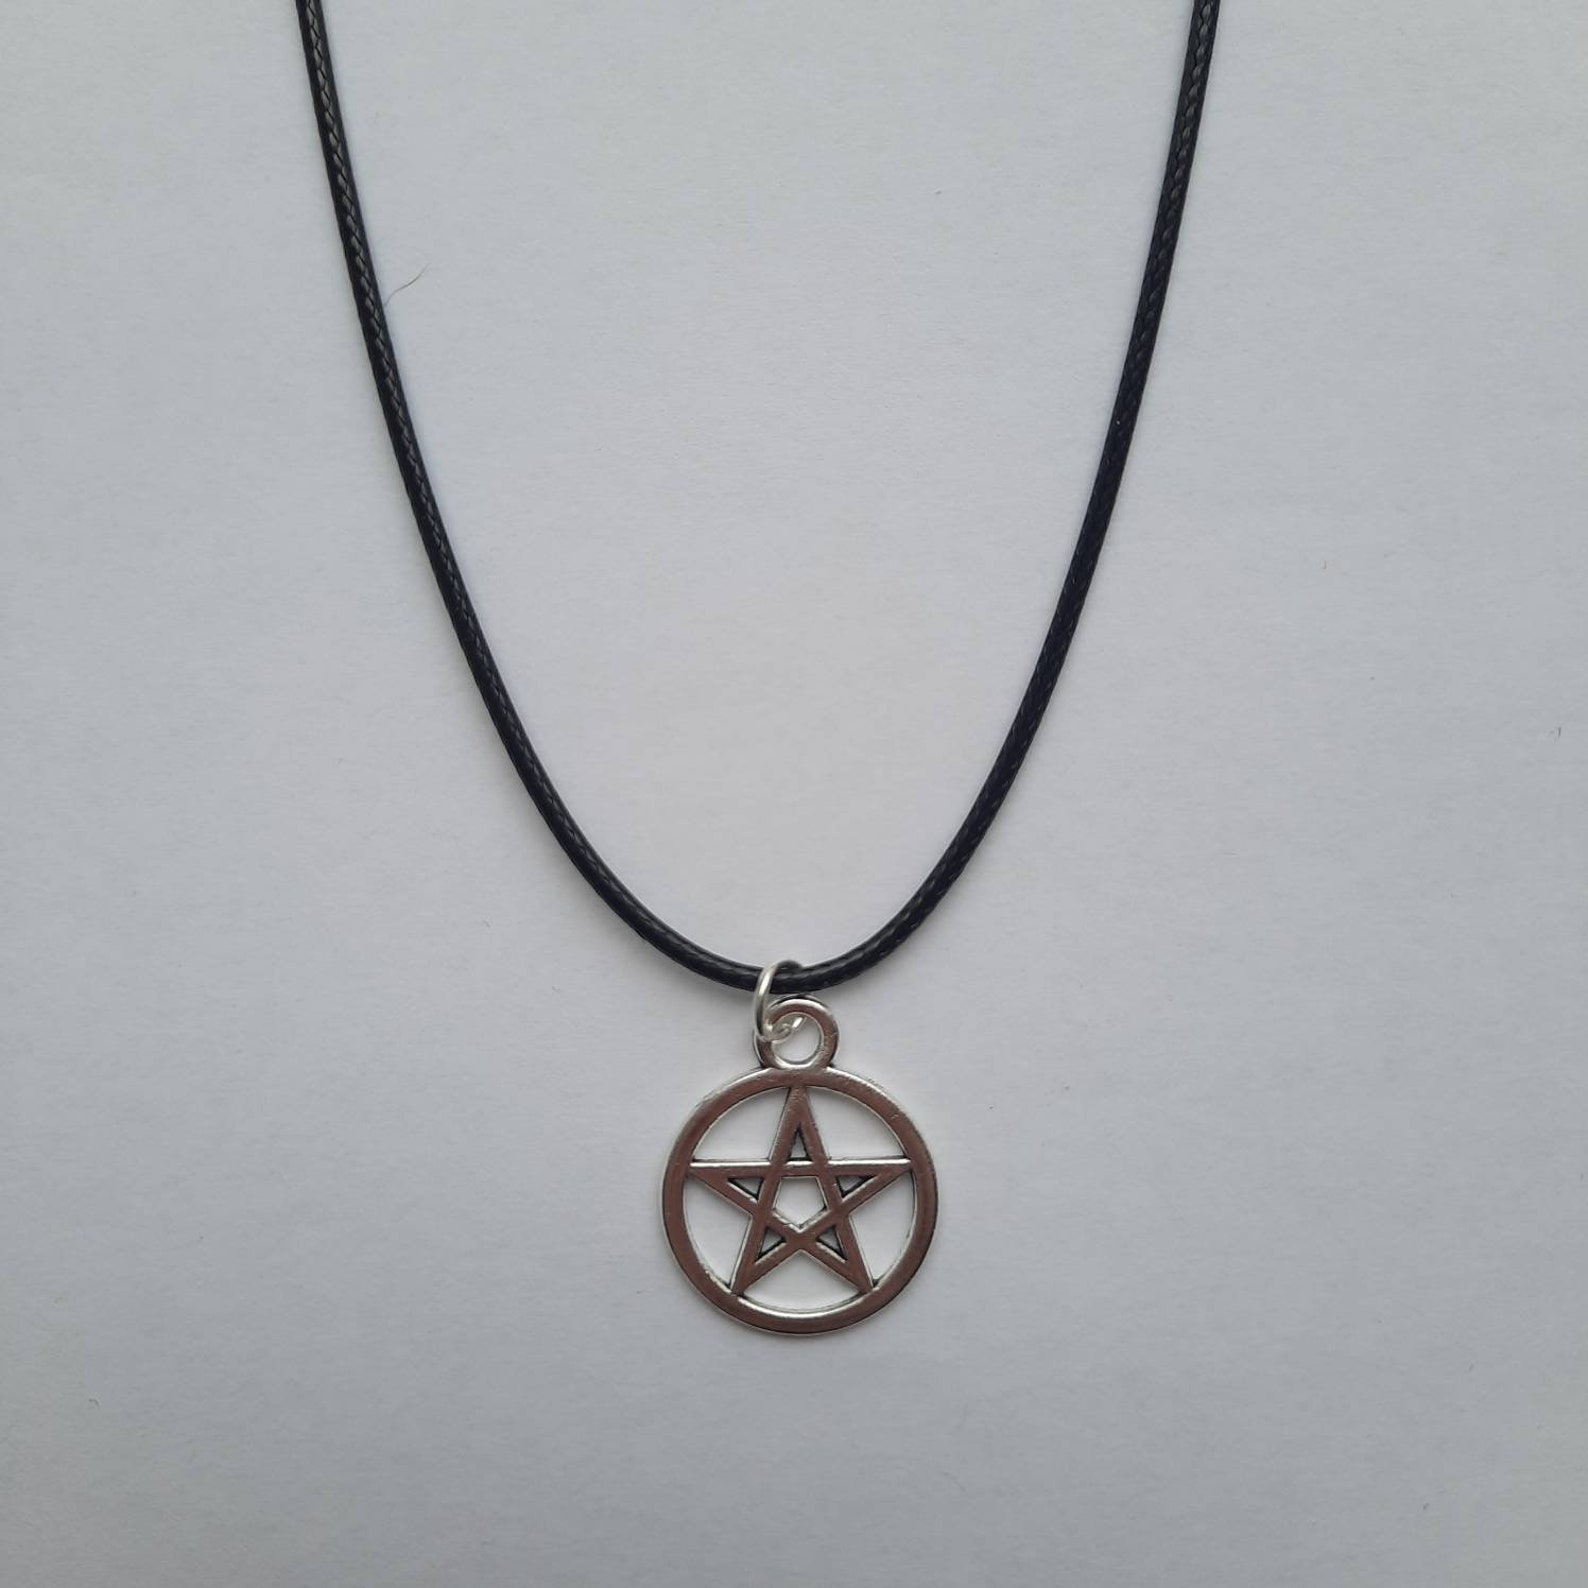 Pentagram necklace silver pendant Goth emo grunge | Etsy